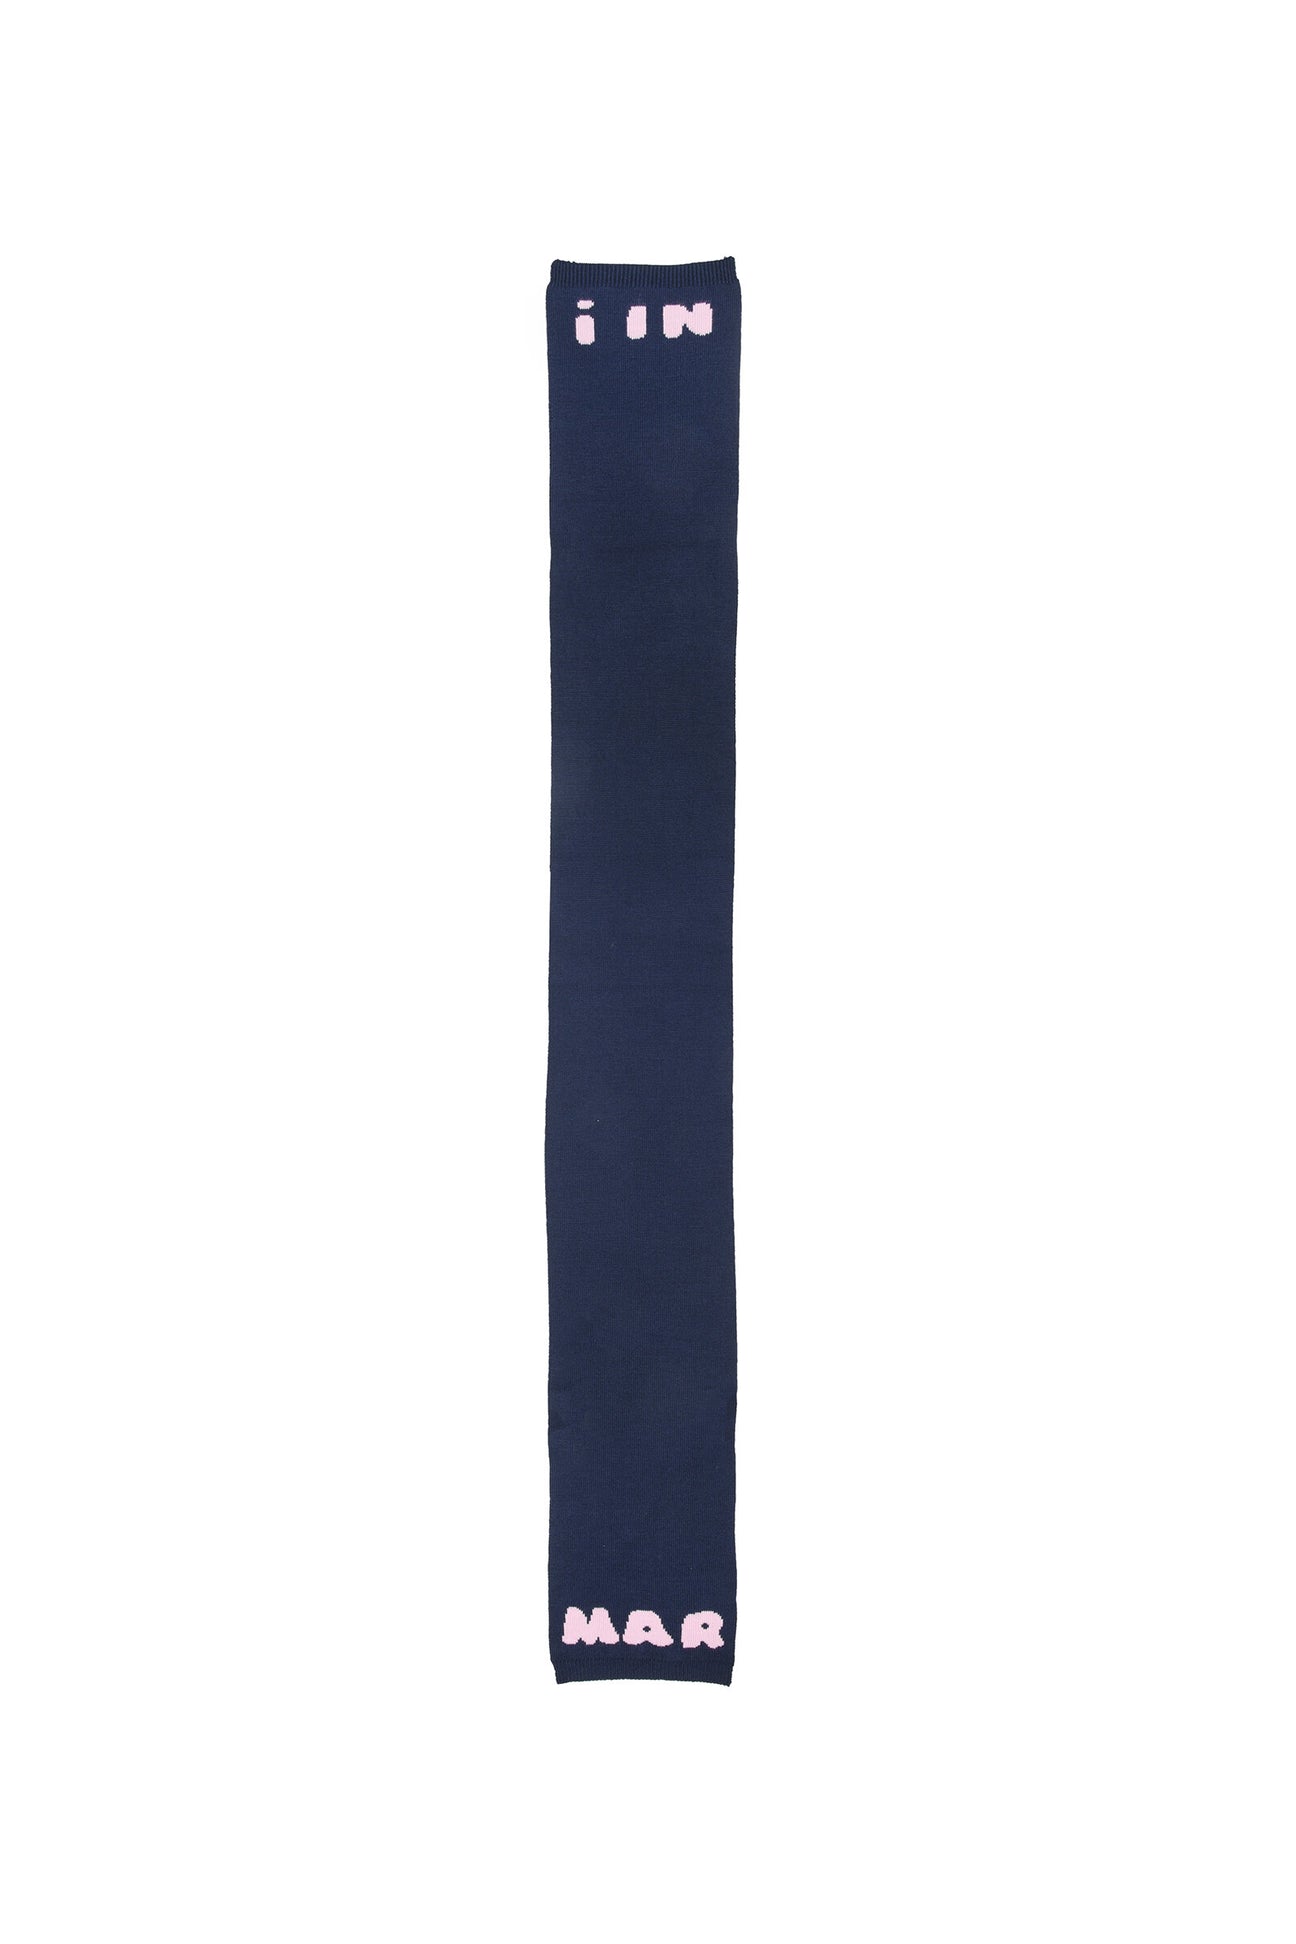 Louis Vuitton Tricolor Monogram Puffer Jacket Navy. Size 36